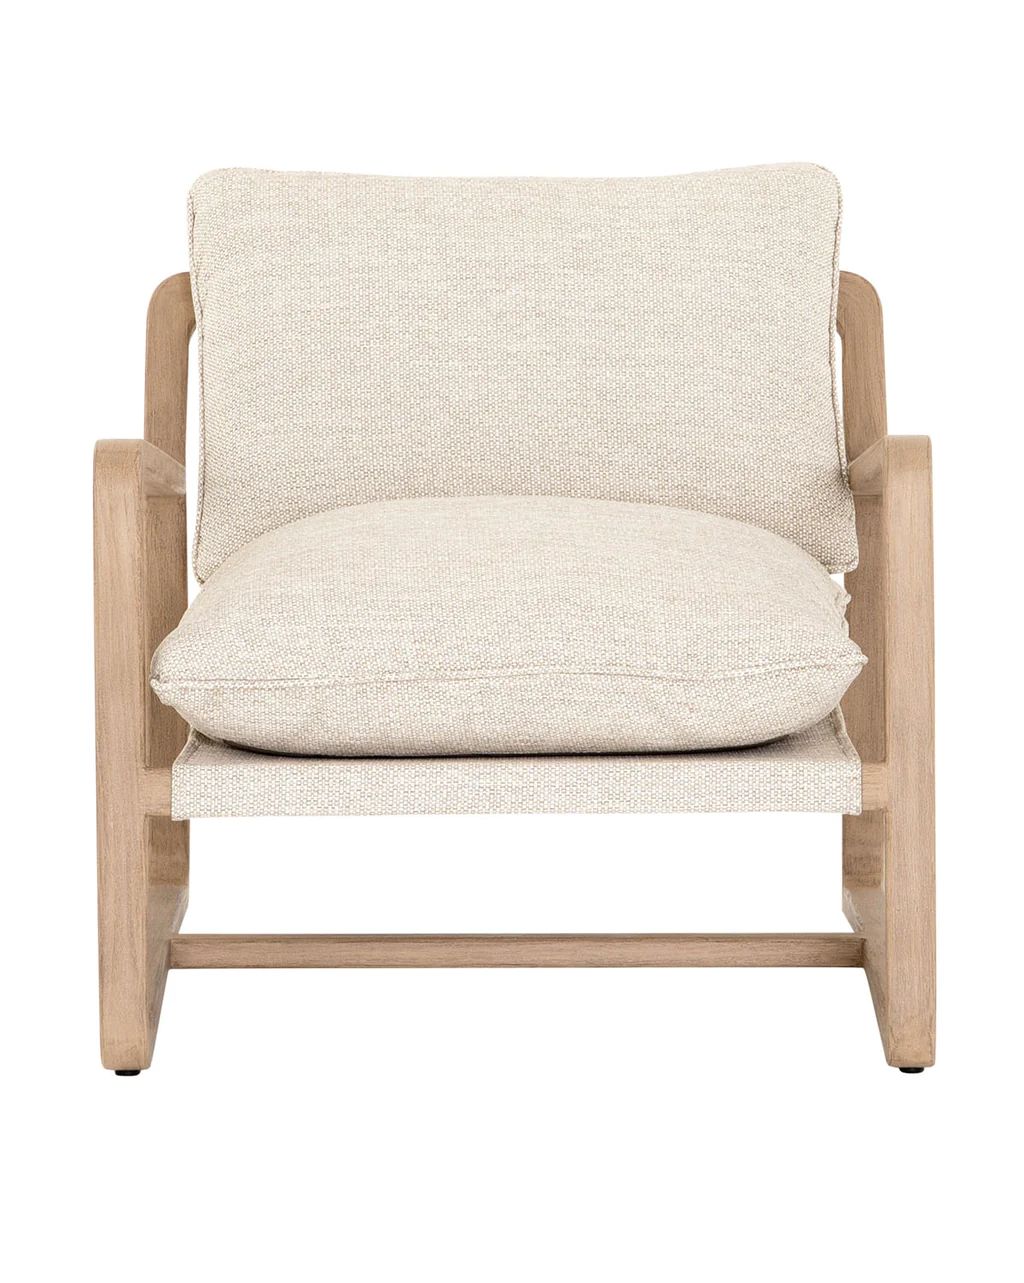 Ura Outdoor Chair | McGee & Co.